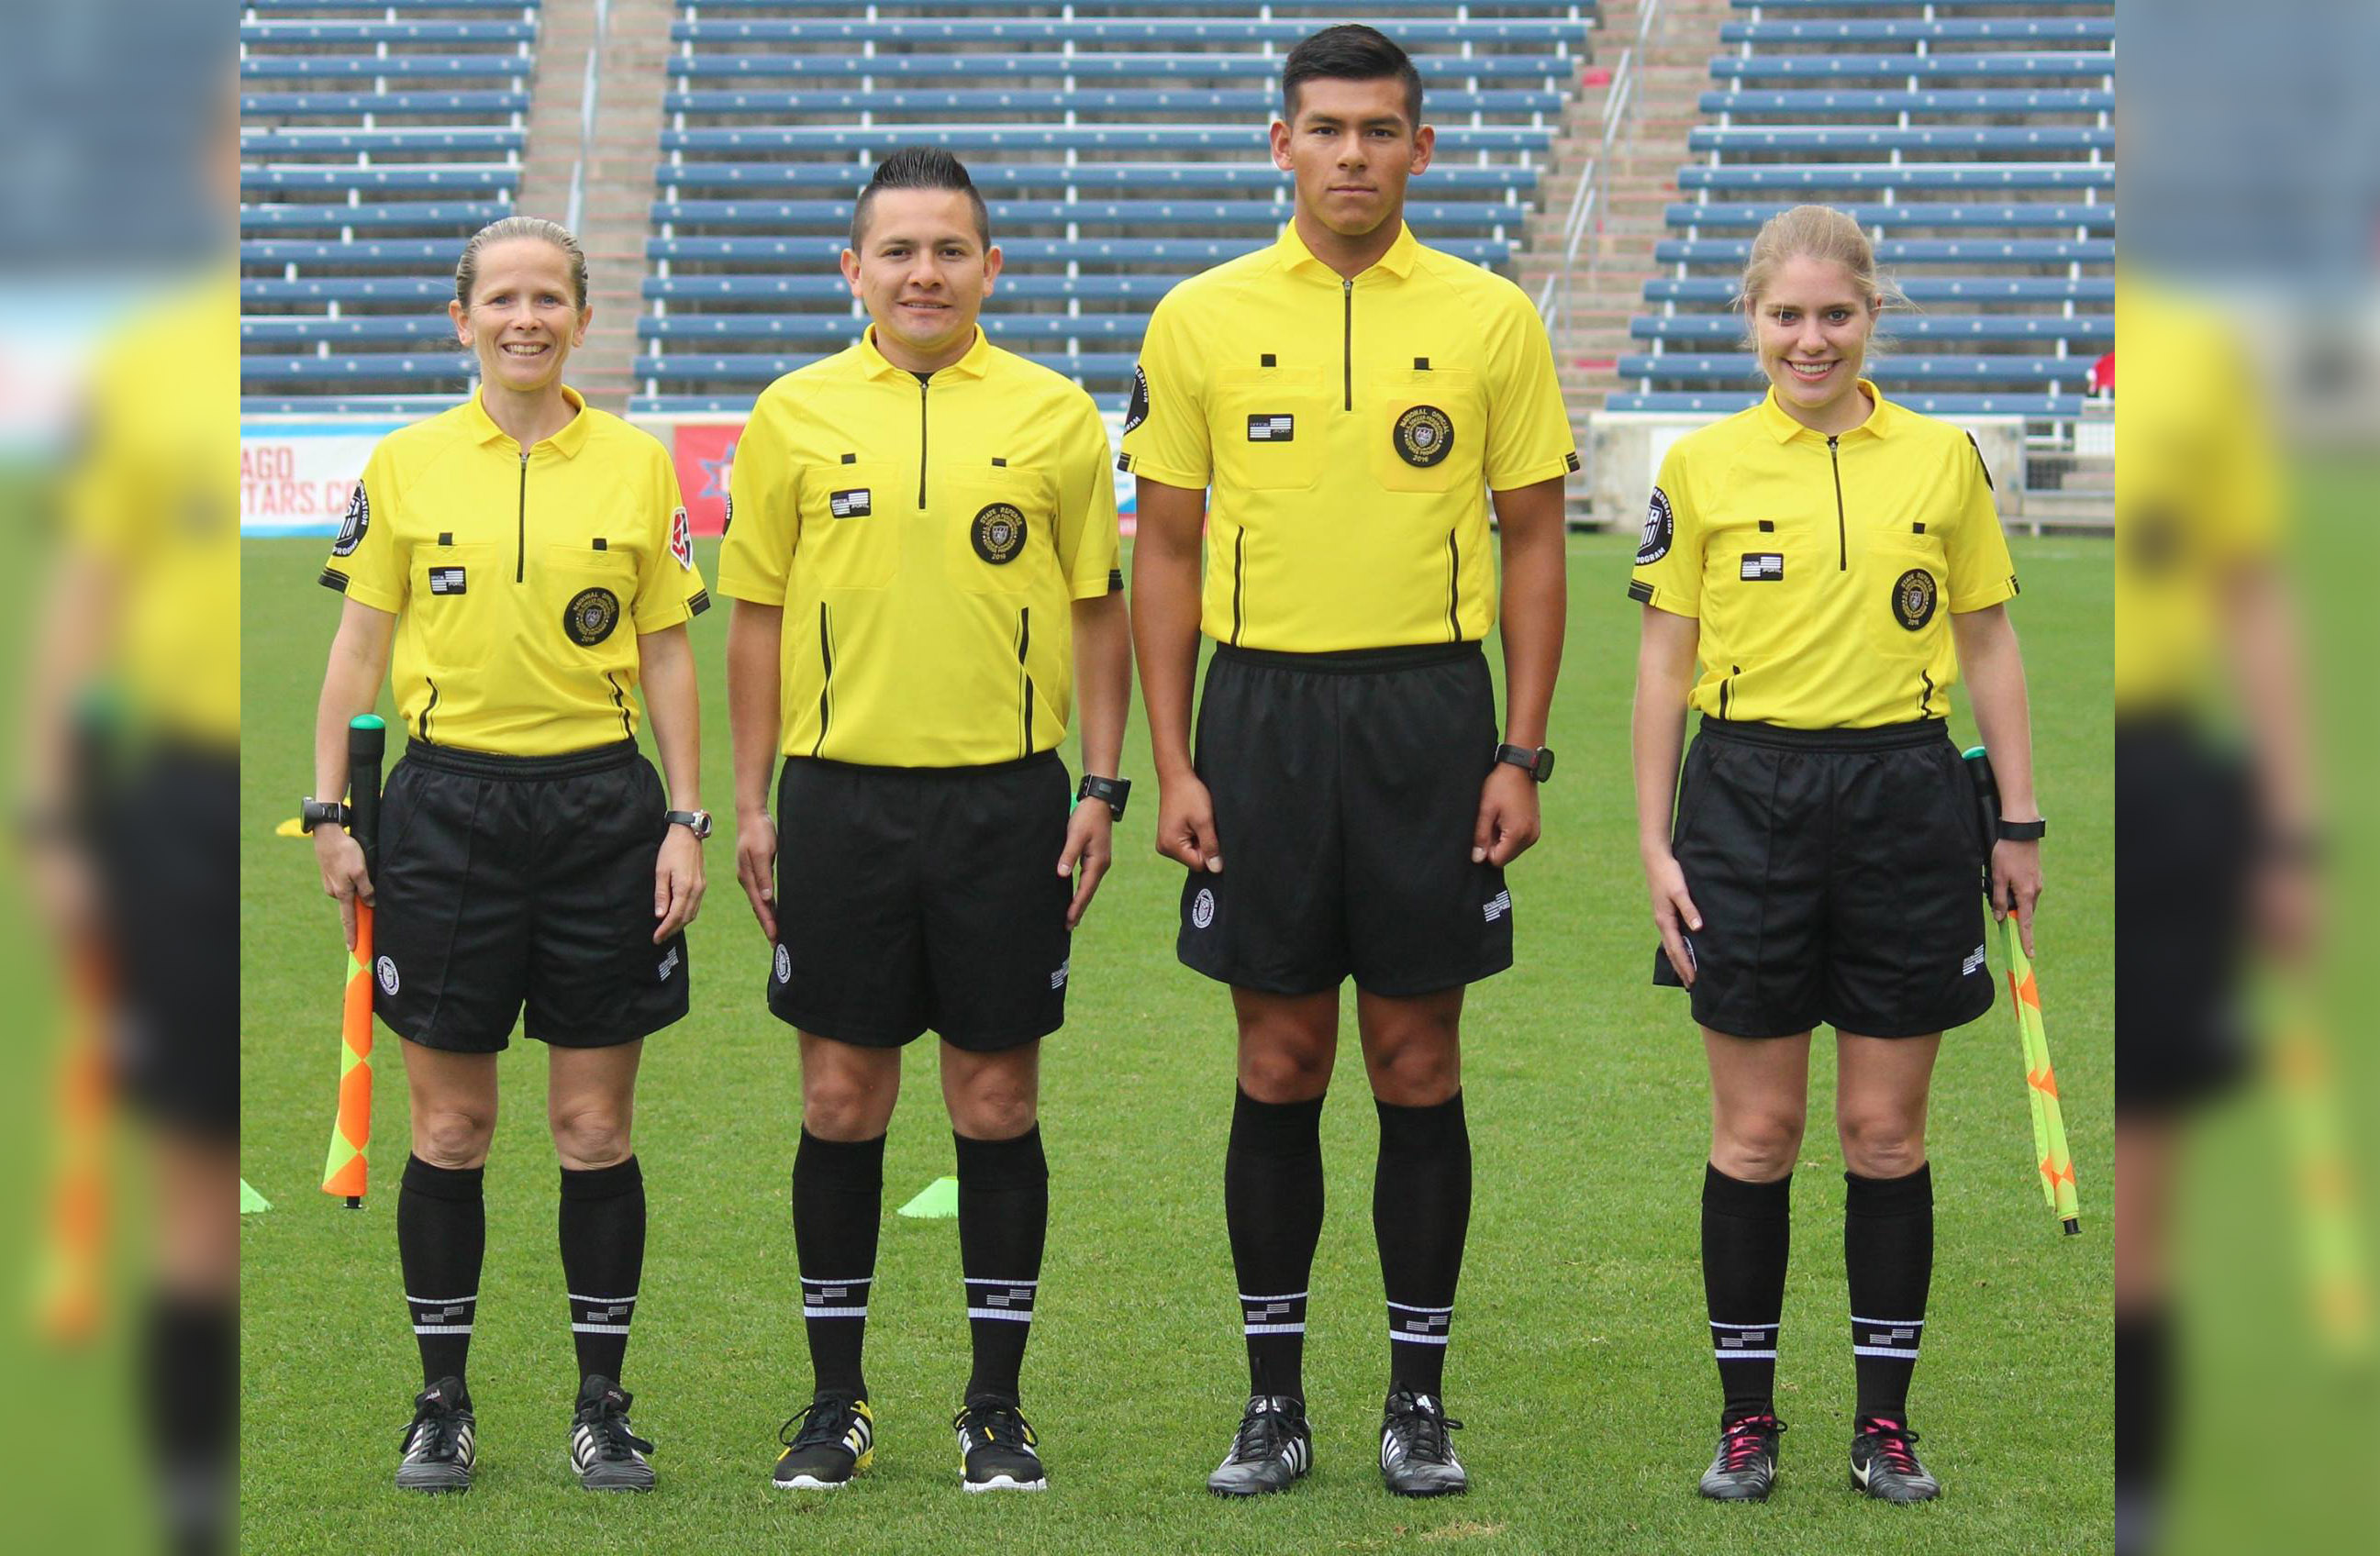 Referees Uniform 31